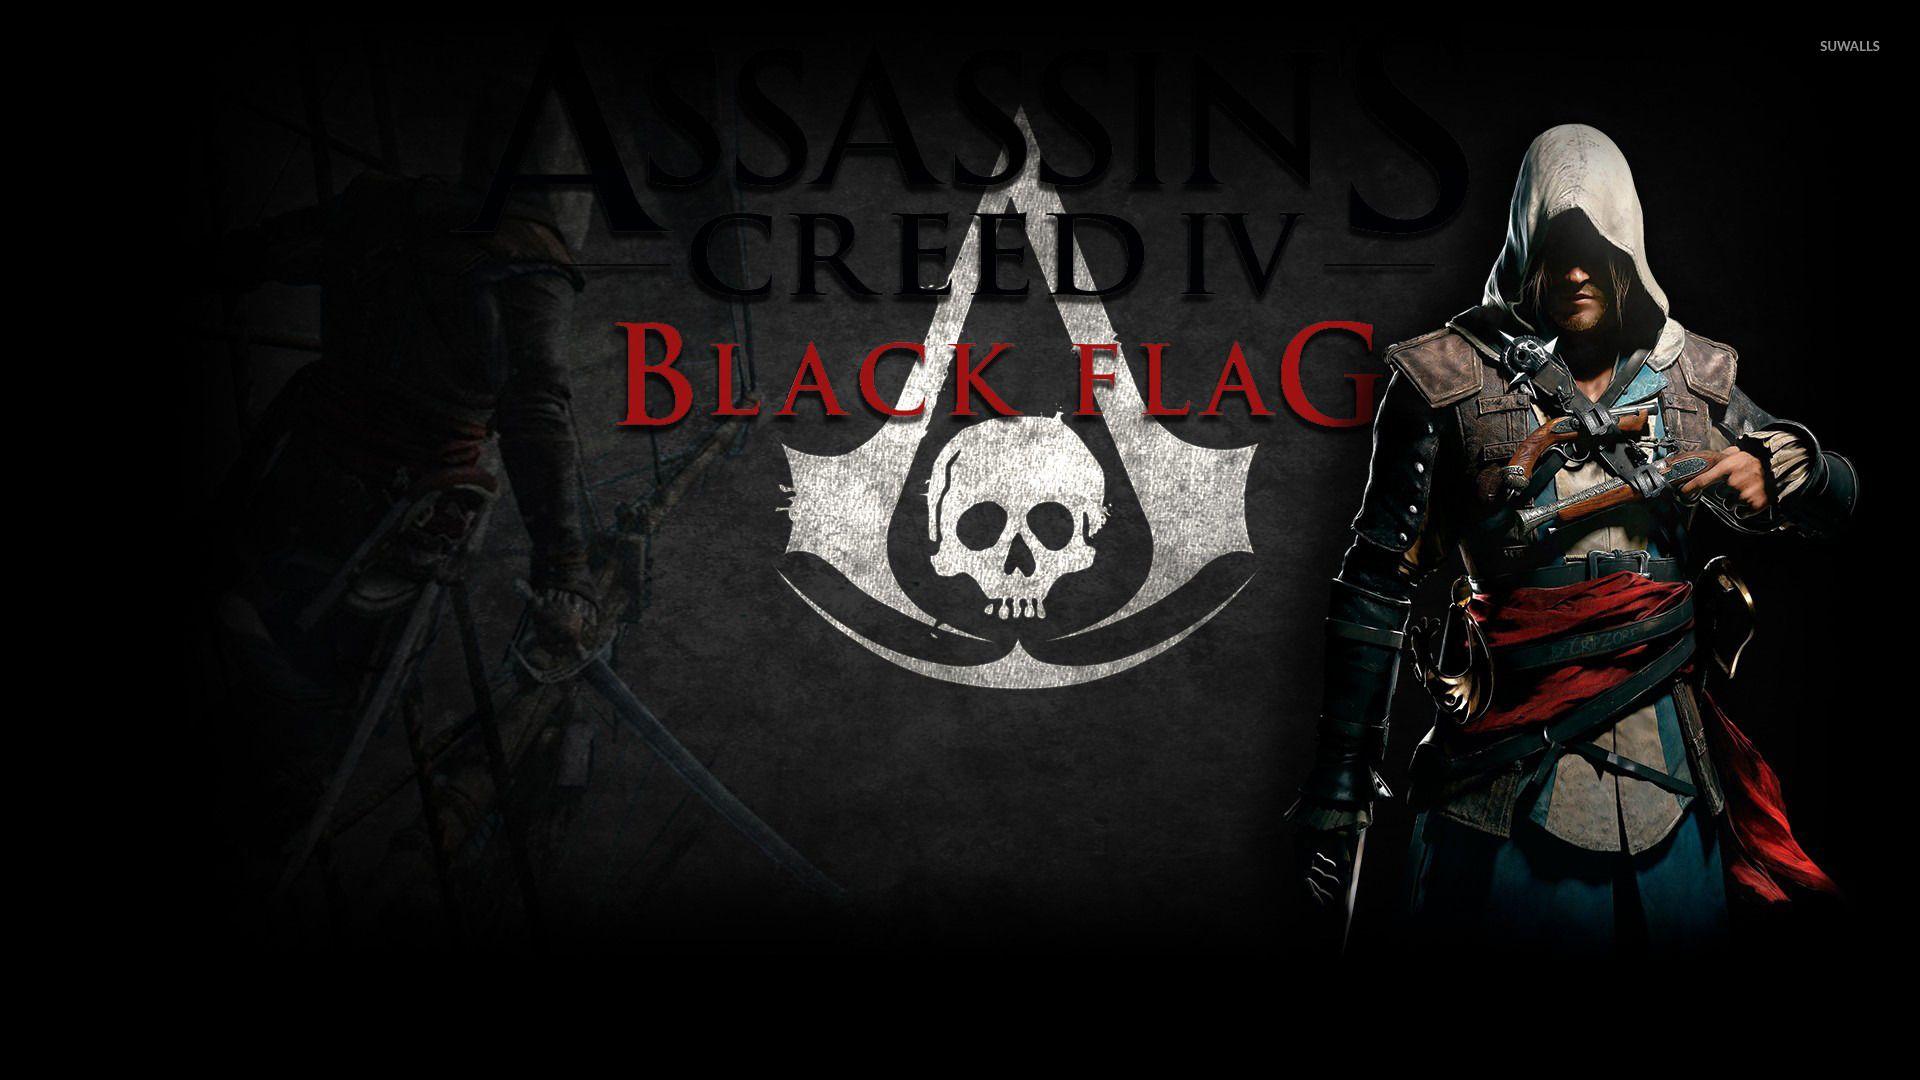 Edward Kenway's Creed IV: Black Flag [4] wallpaper